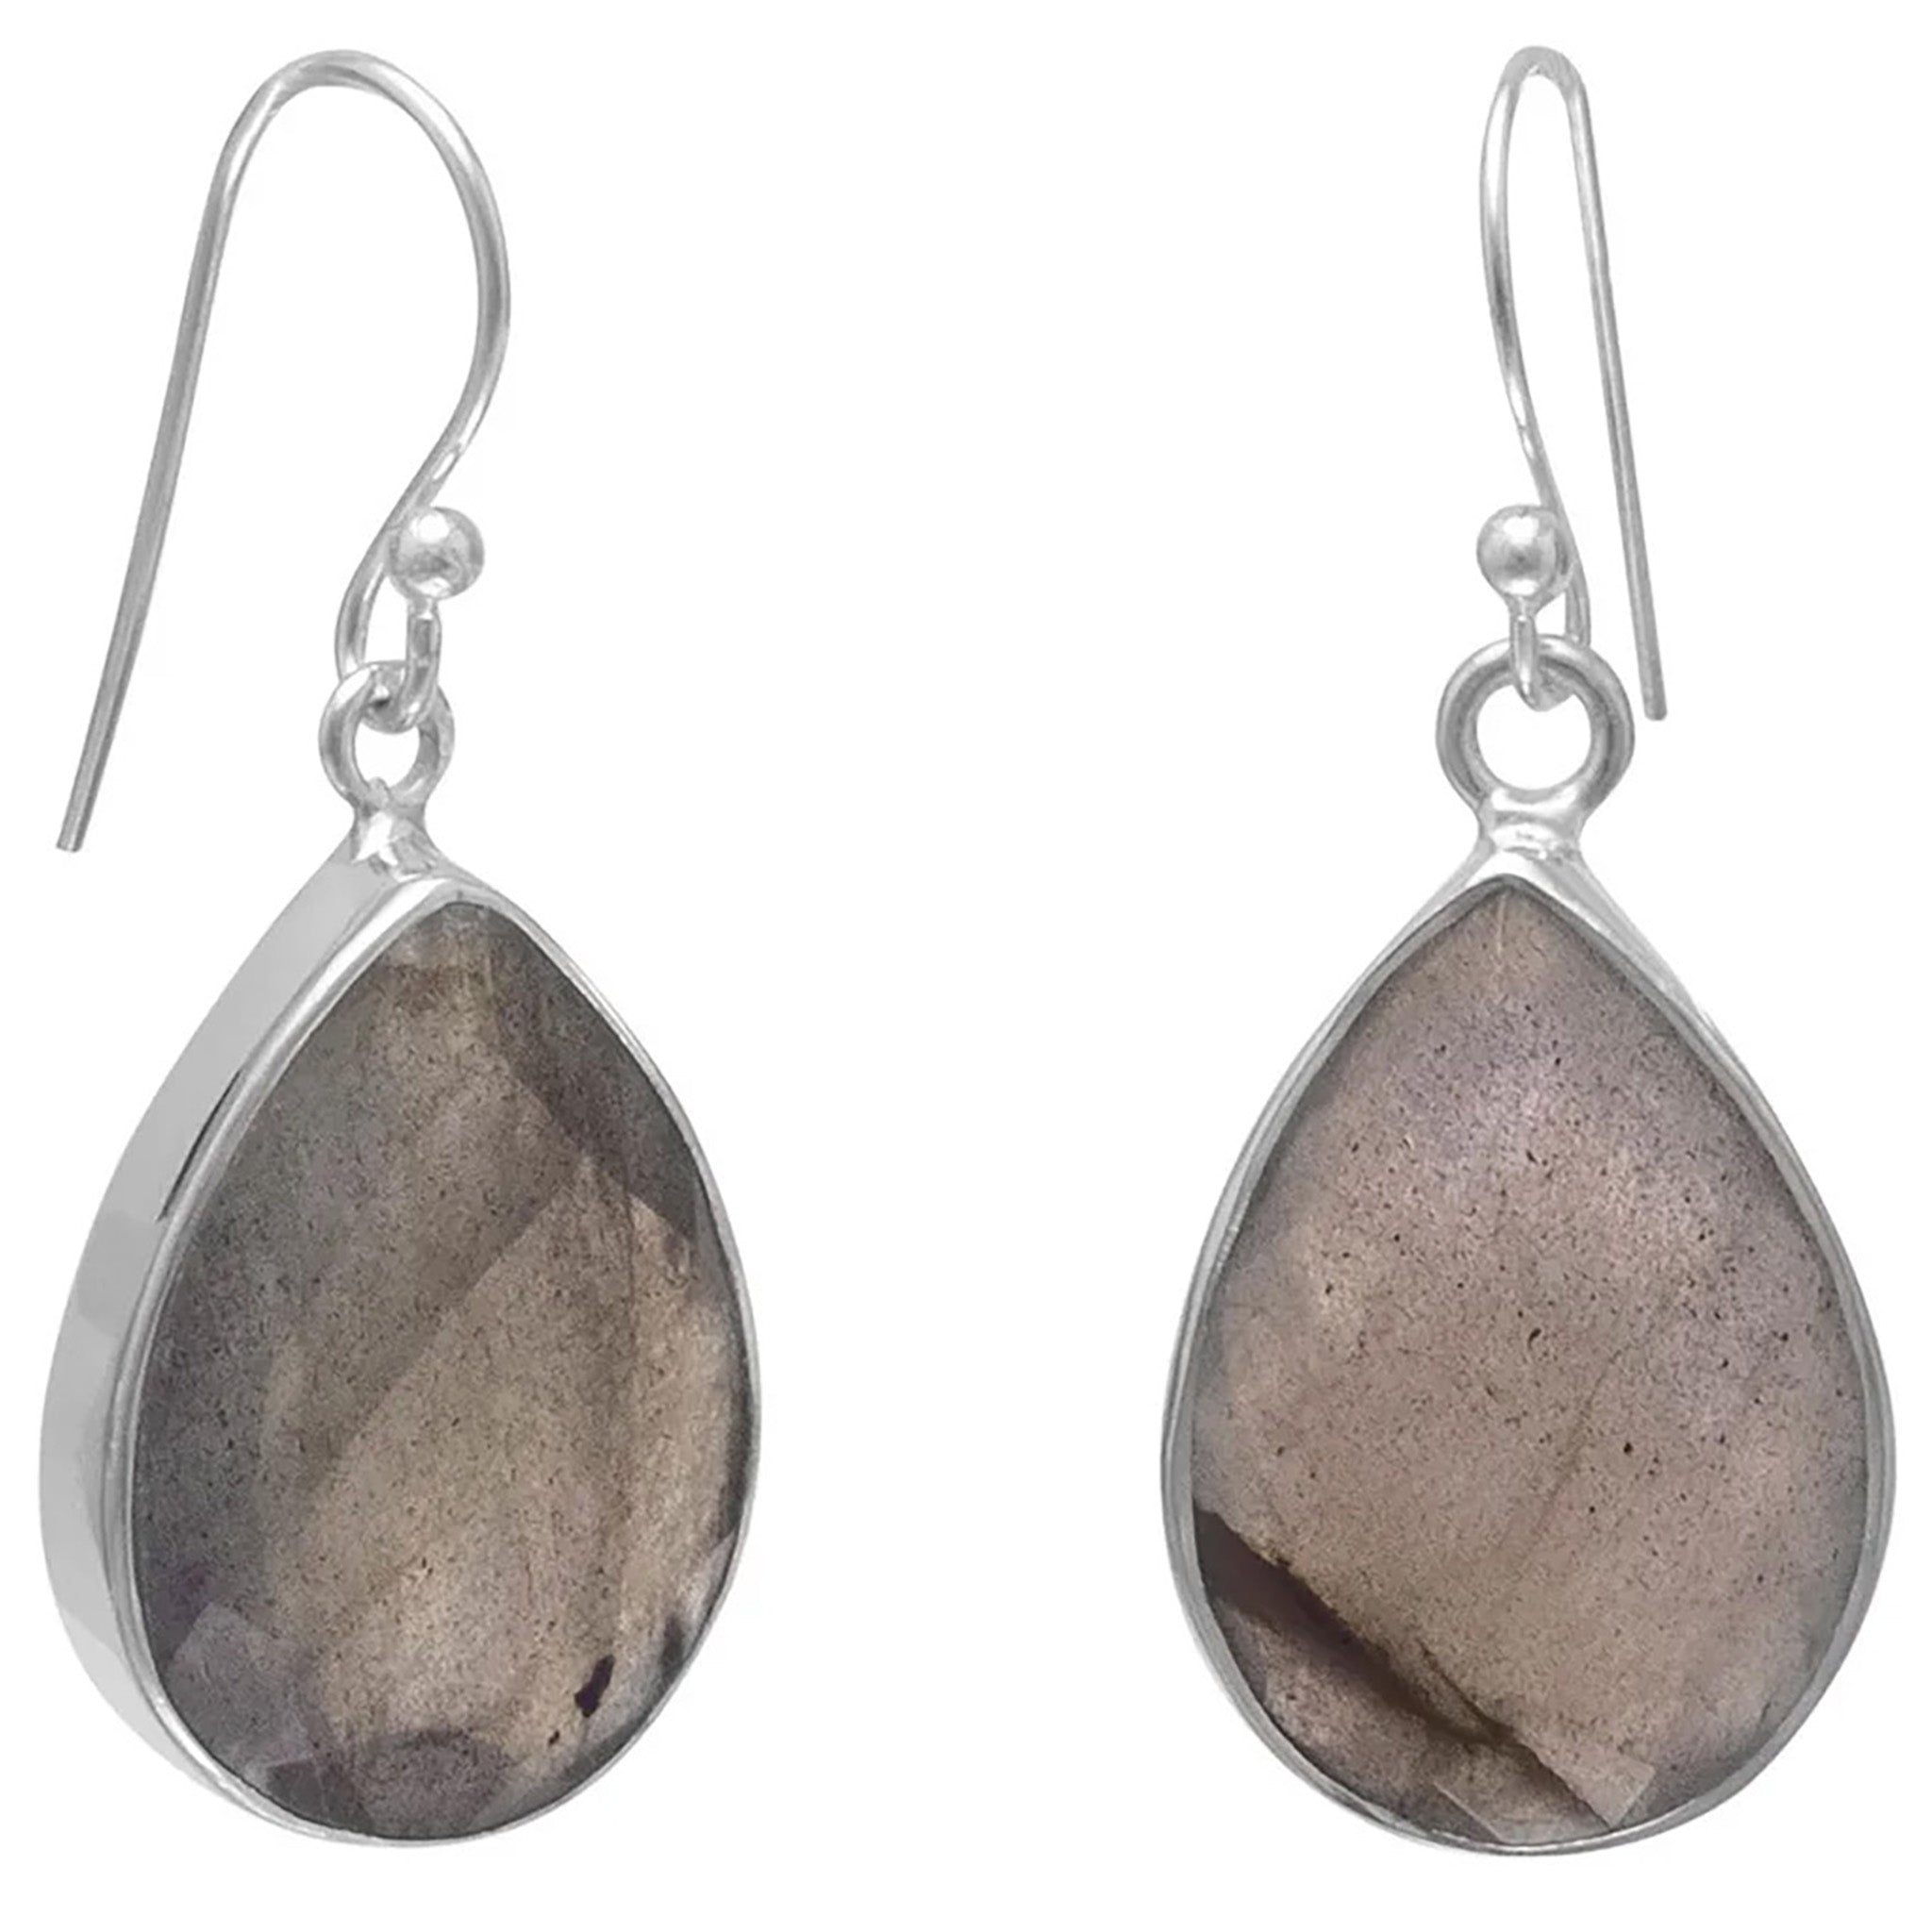 Labradorite Earrings – The Silver Connection